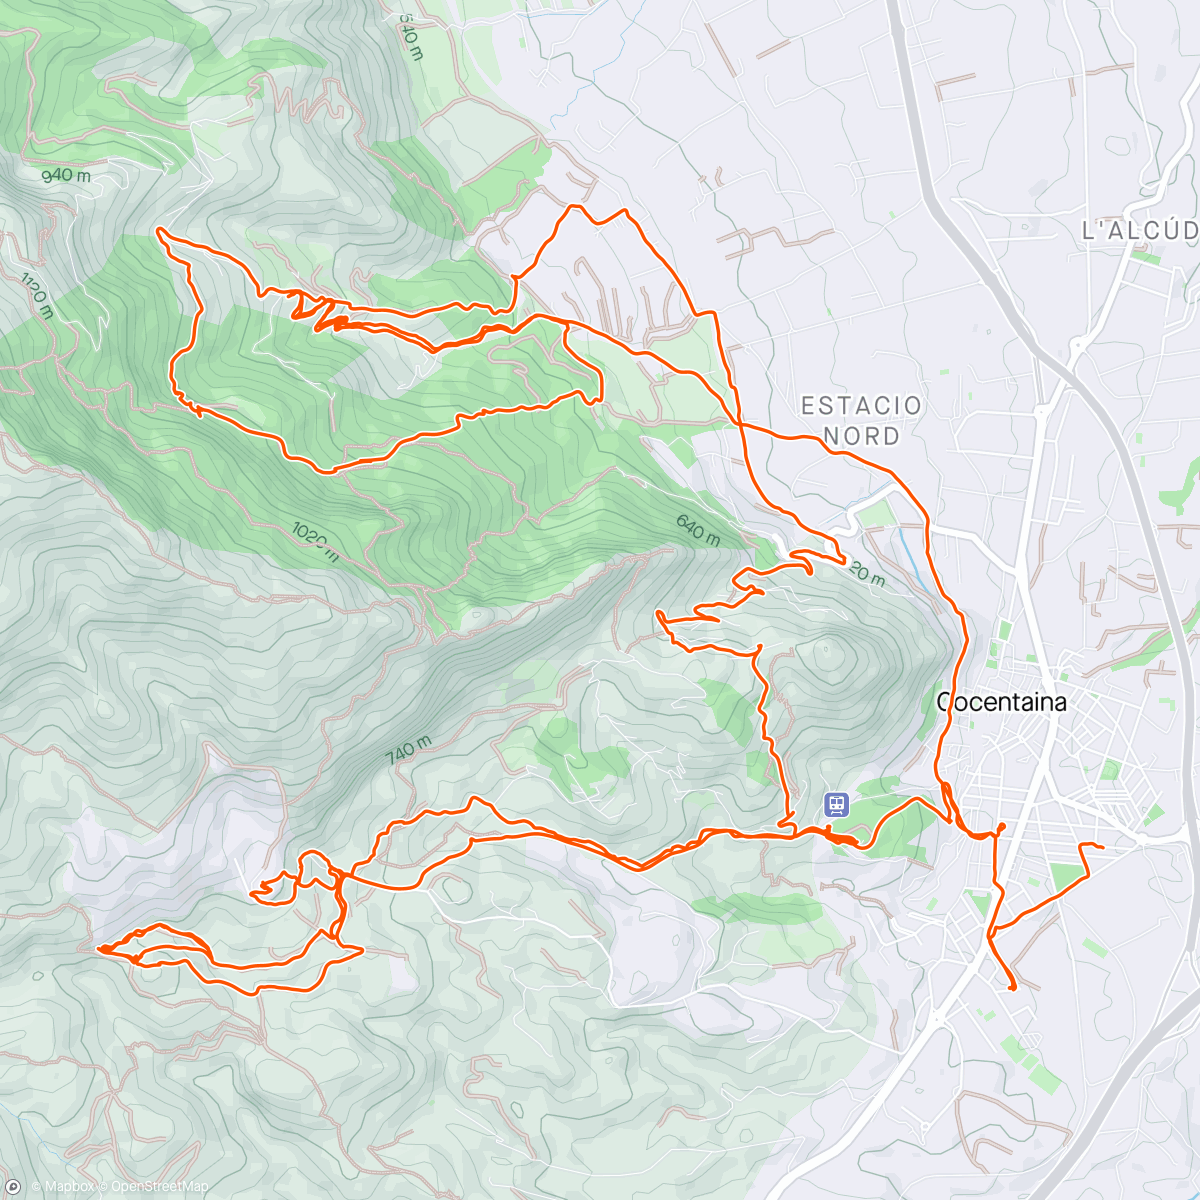 Map of the activity, Local trails, charlton-querola-castell-canterazo-menino-bombi park-red bull-santa